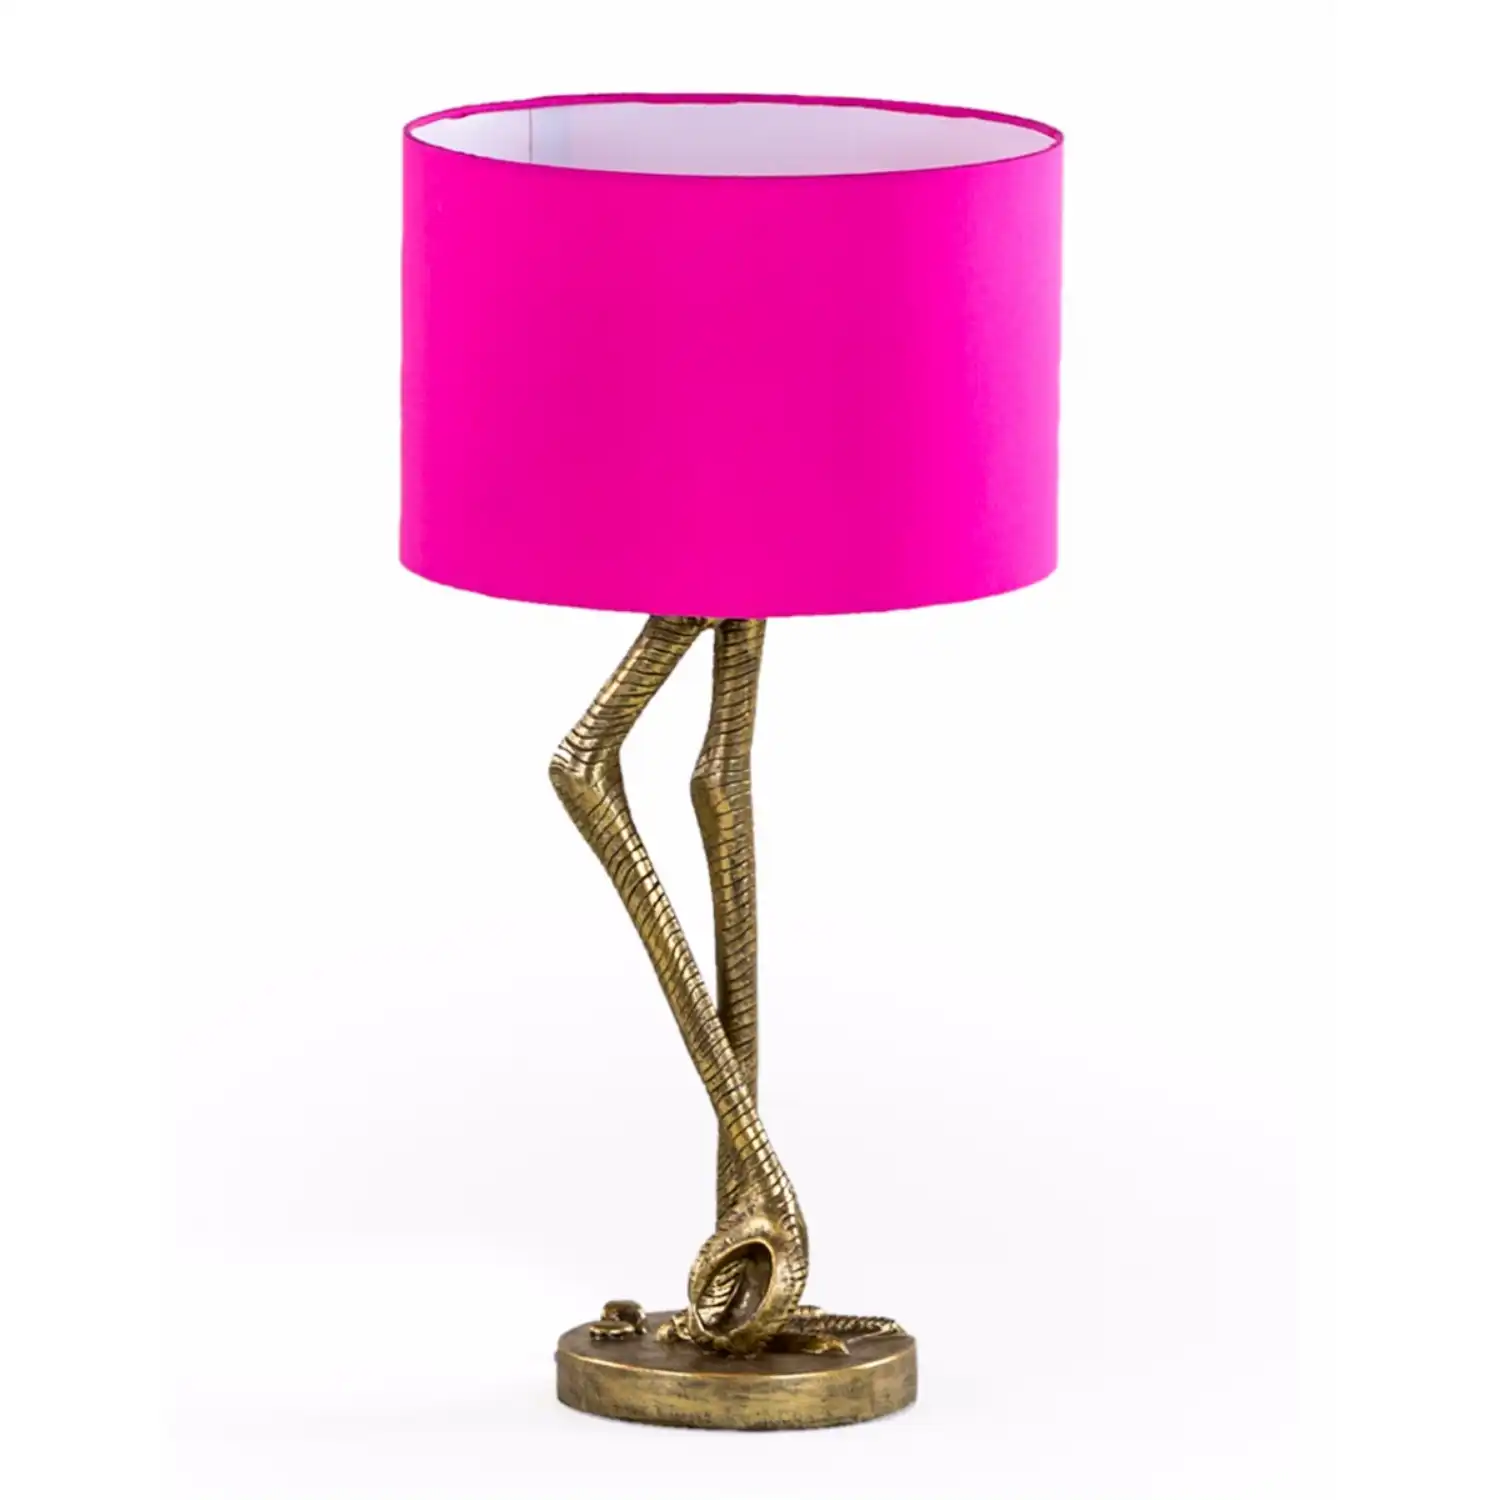 Antique Gold Flamingo Leg Table Lamp Pink Shade